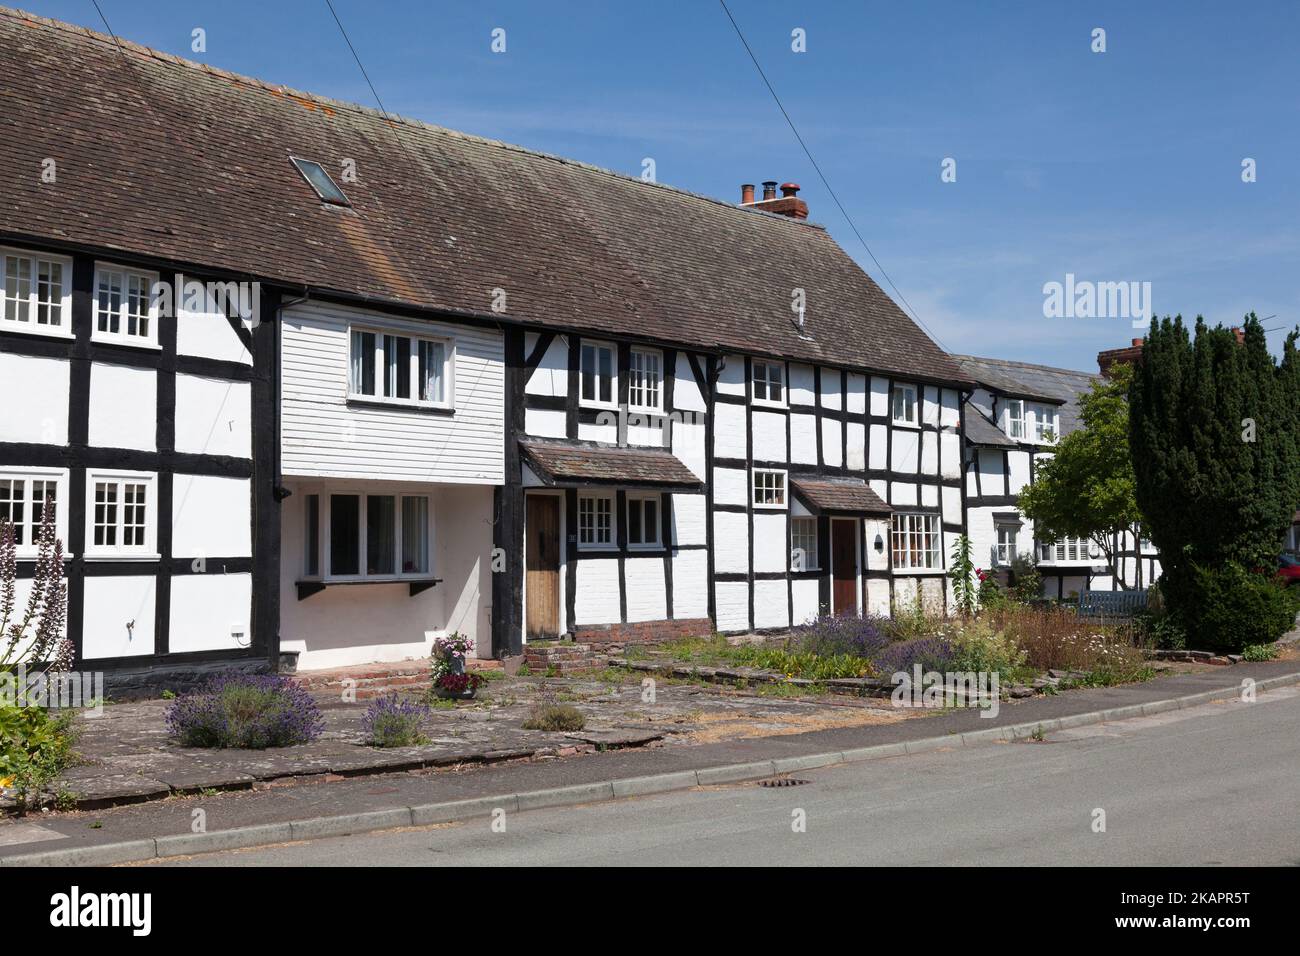 Maisons historiques à colombages, Dilwyn, Herefordshire Banque D'Images